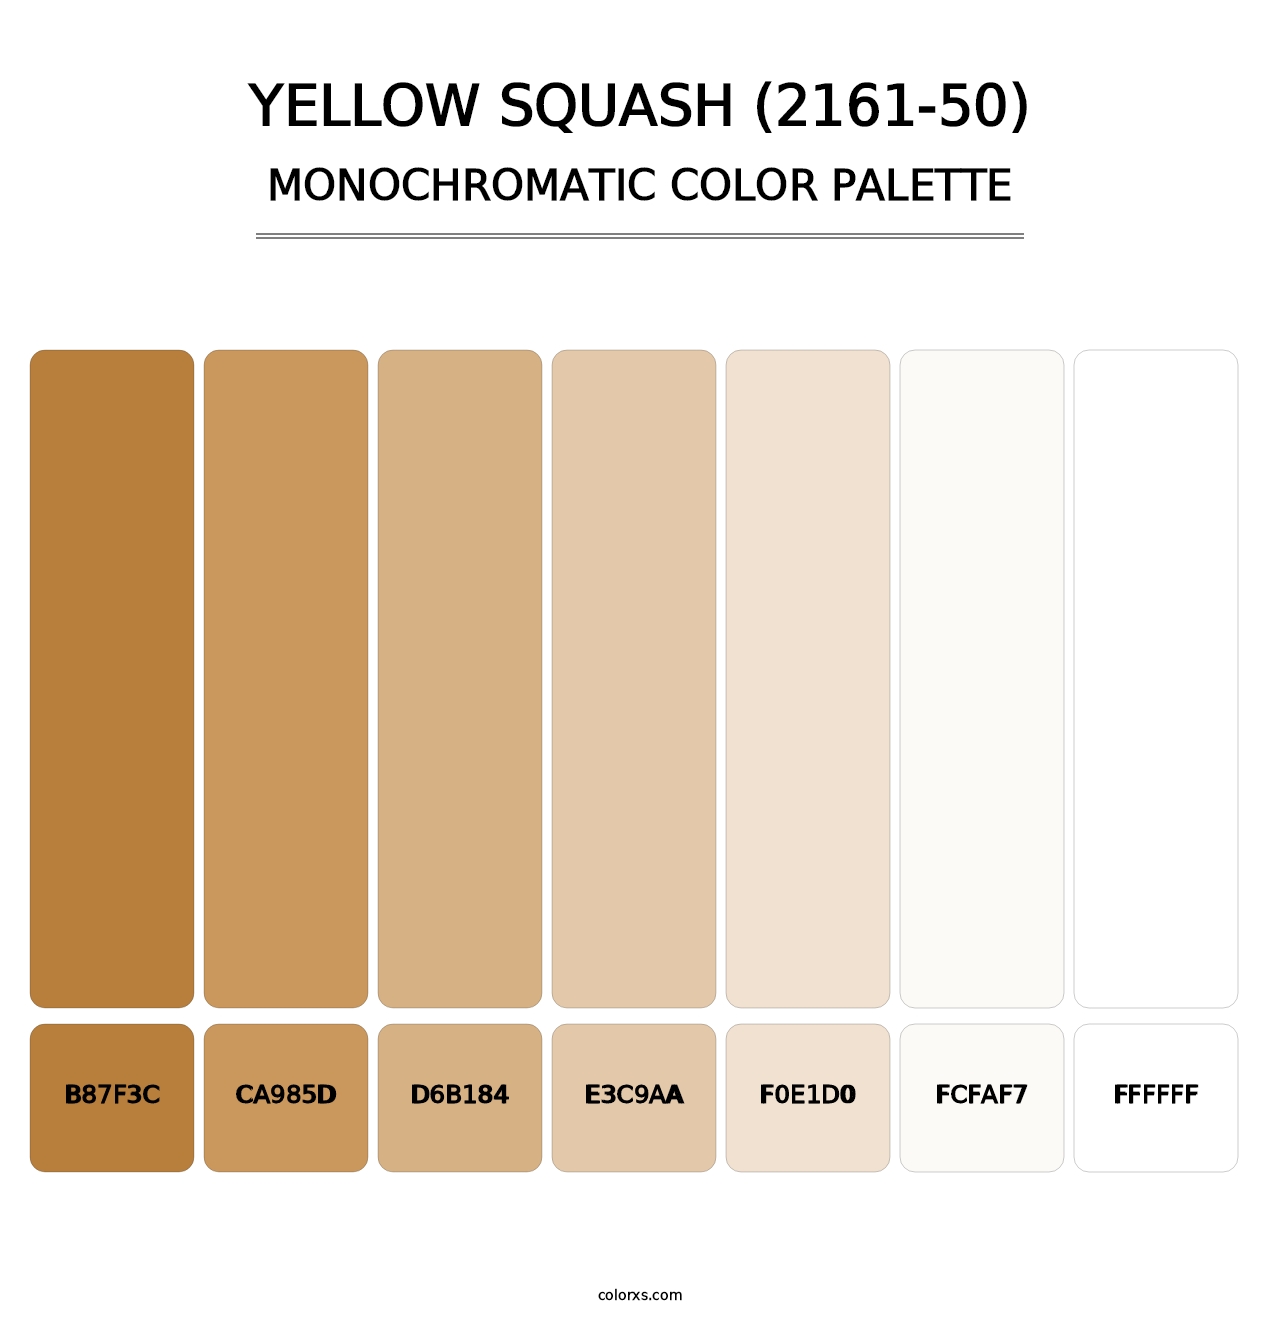 Yellow Squash (2161-50) - Monochromatic Color Palette